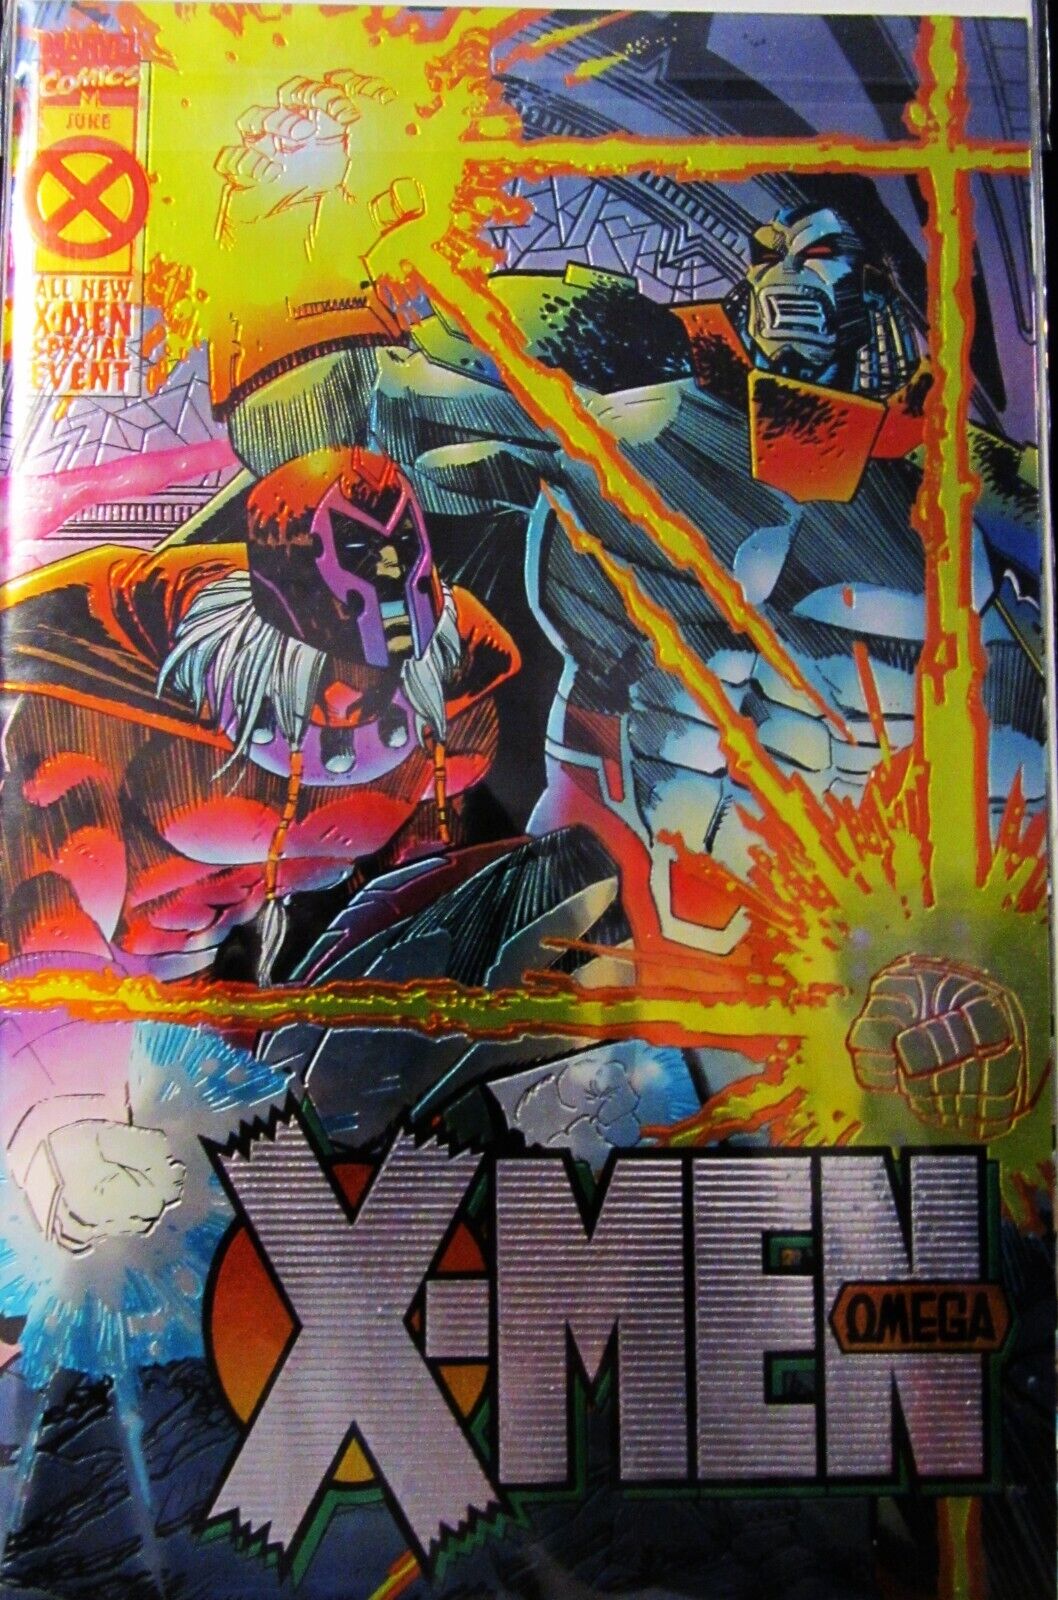 MARVEL COMICS X-MEN LOT OF 3 COLLECTIBLE CHROMIUM COVERS